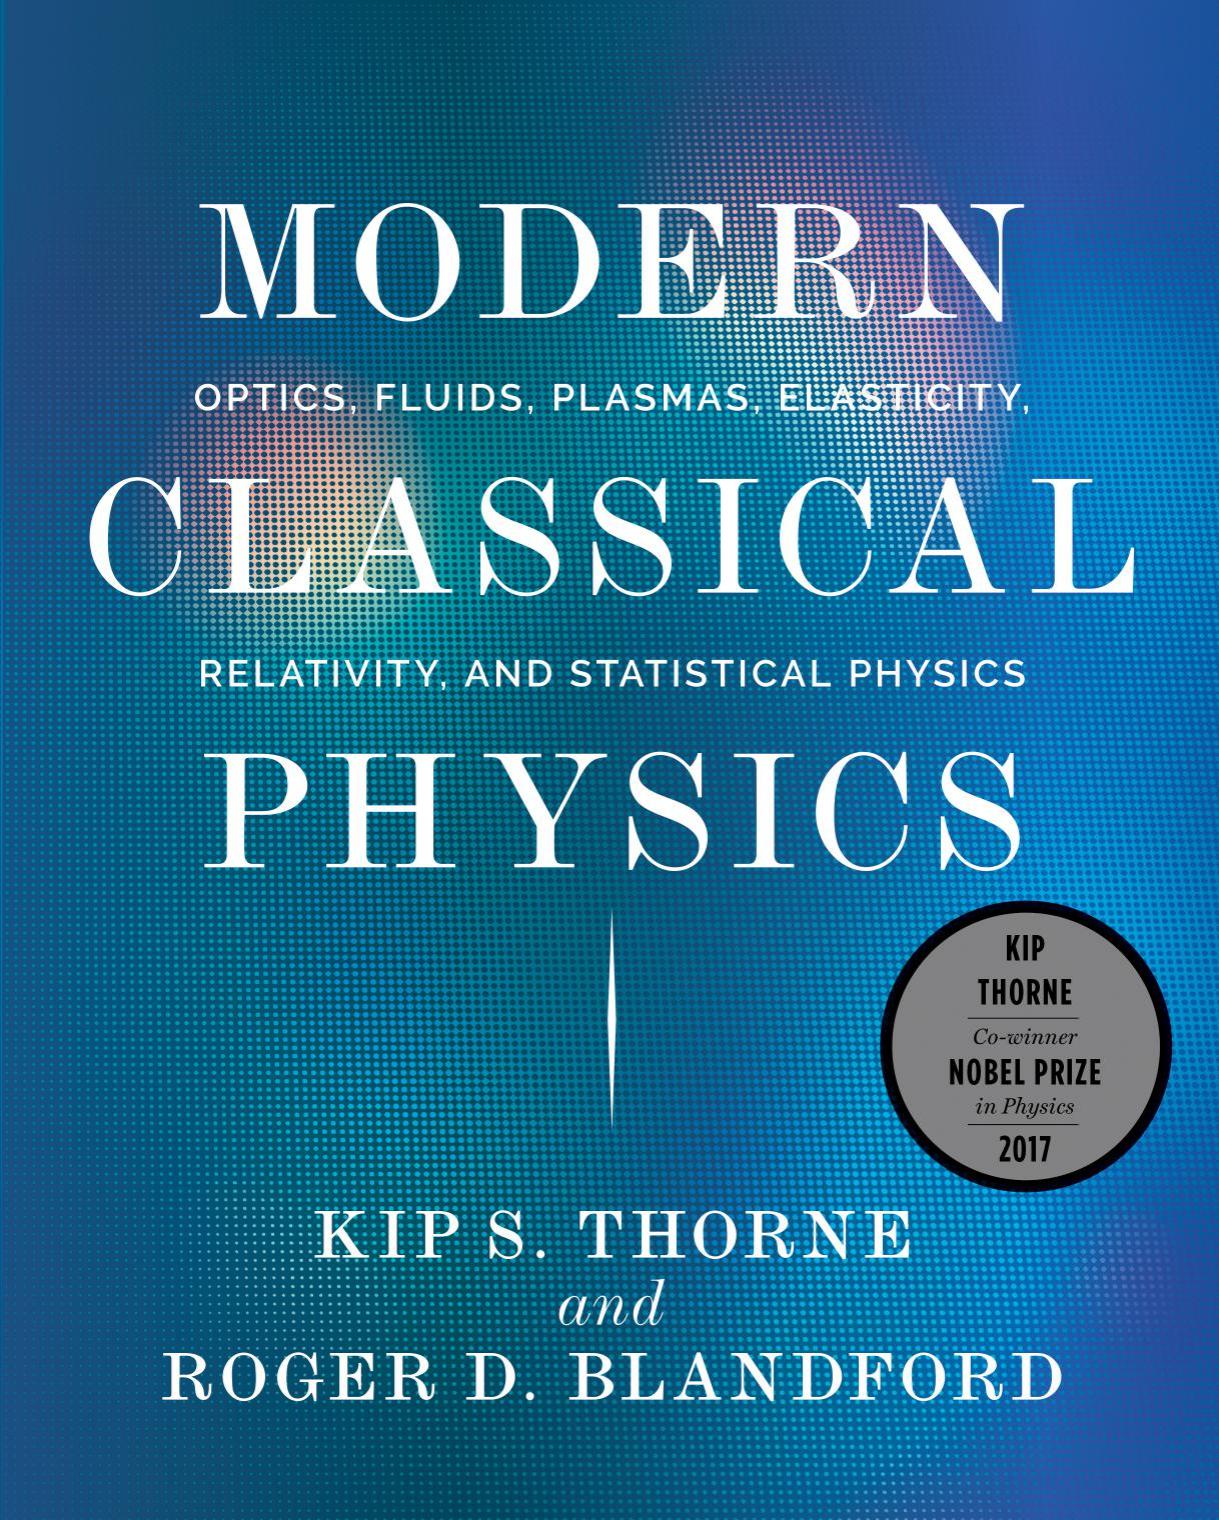 Modern classical physics optics, fluids, plasmas, elasticity, relativity, and statistical physics  2017